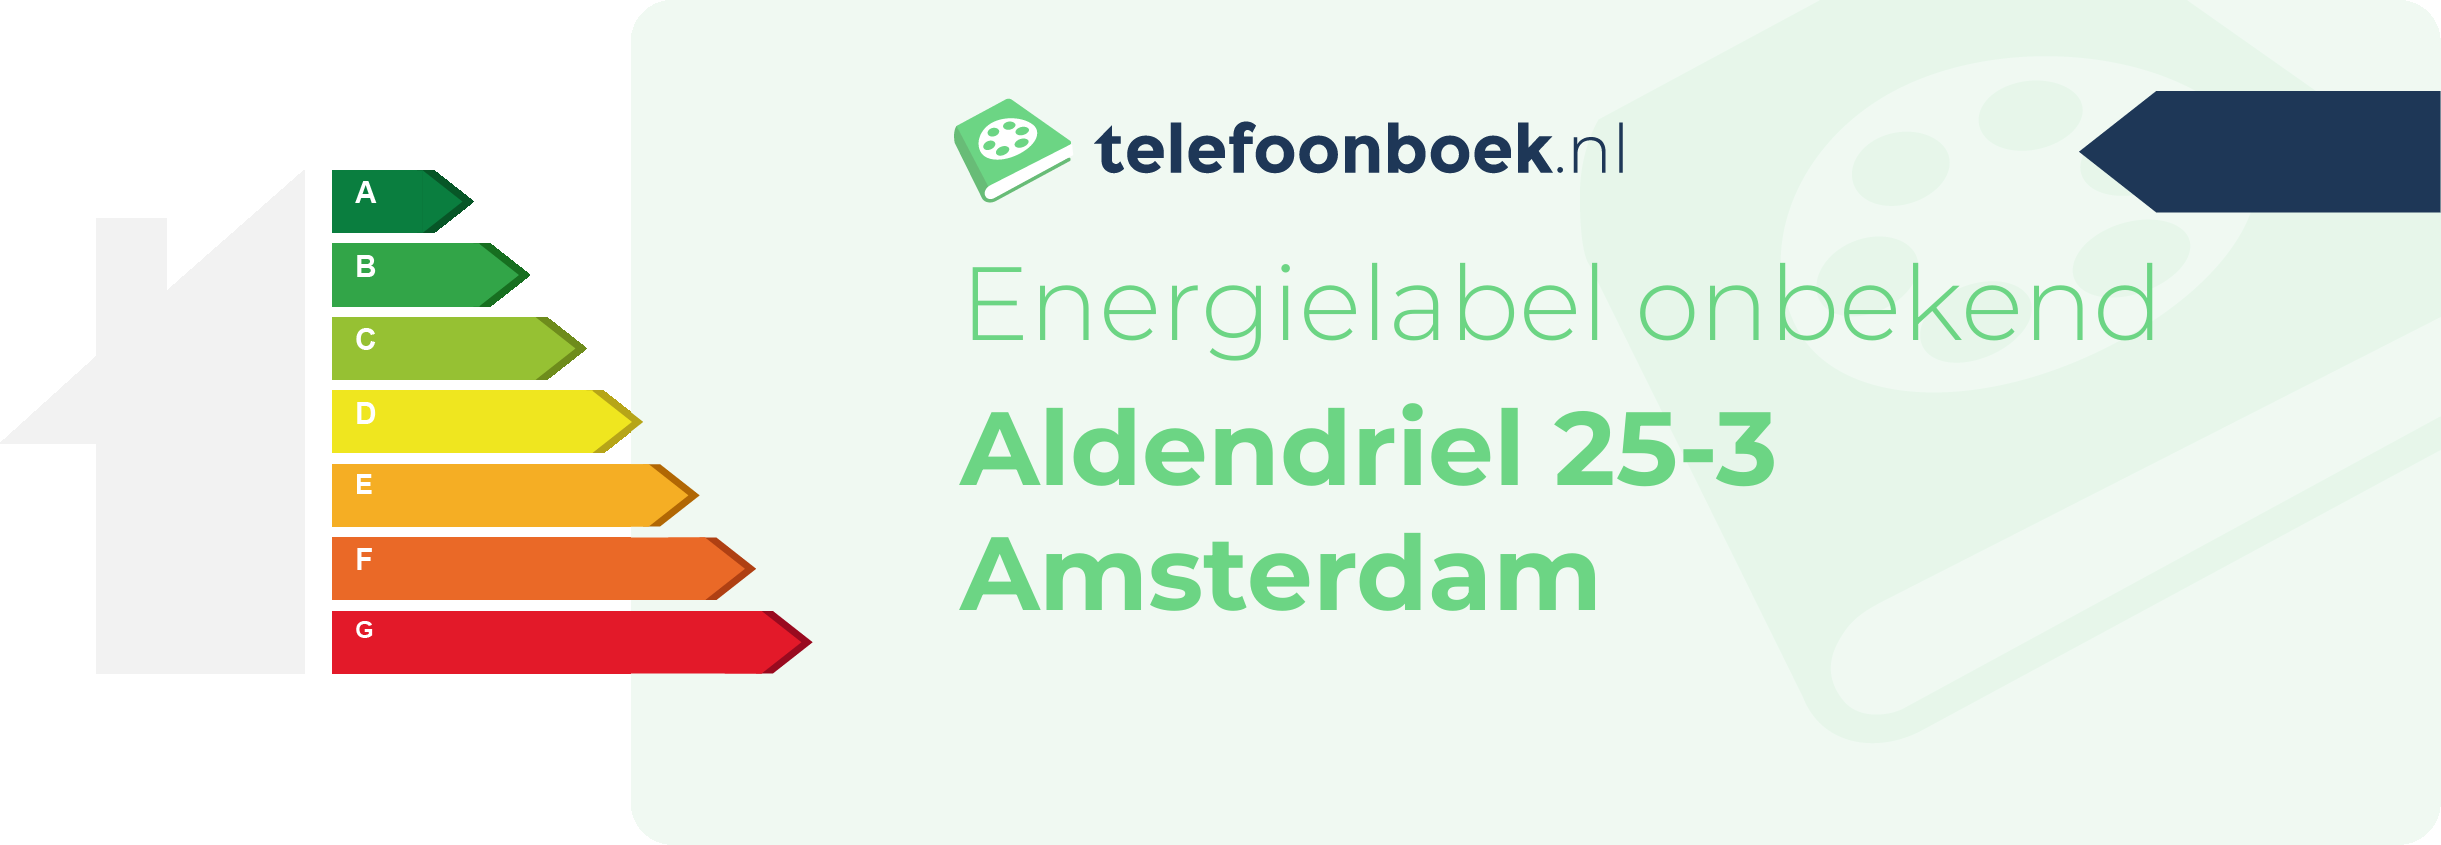 Energielabel Aldendriel 25-3 Amsterdam